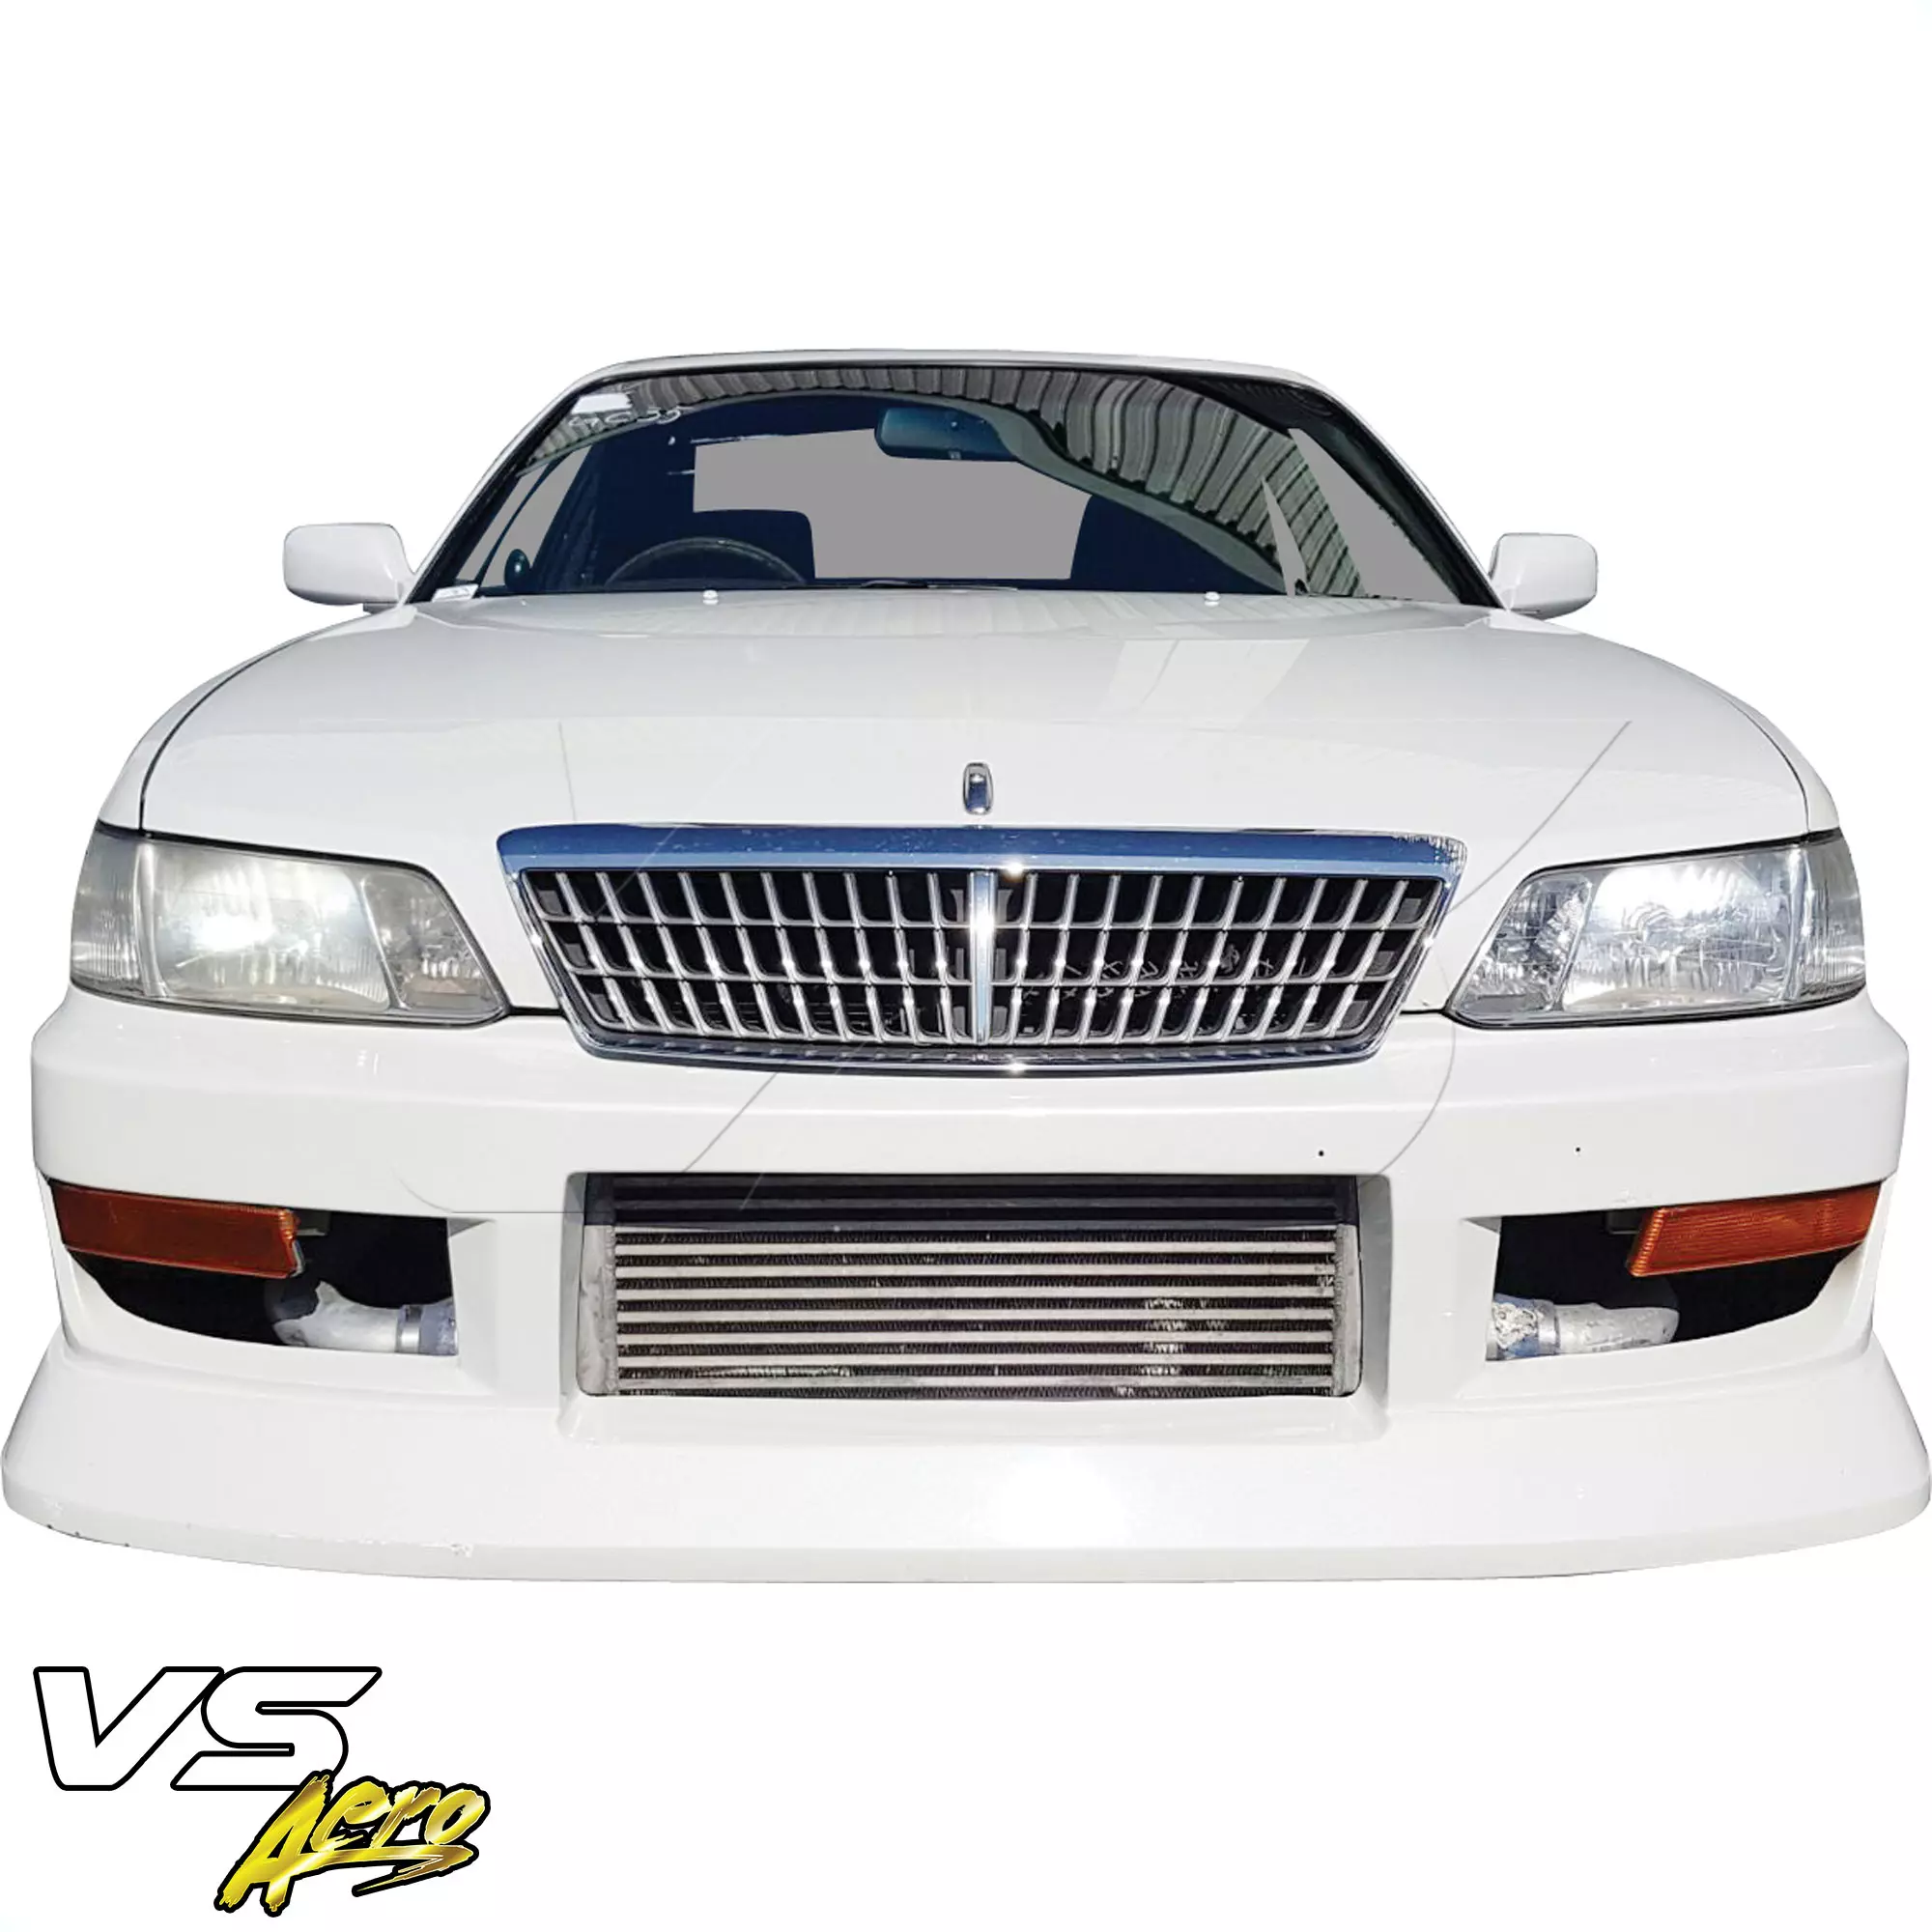 VSaero FRP FKON Body Kit 4pc (early model) > Nissan Laurel C35 1998-2002 - Image 7